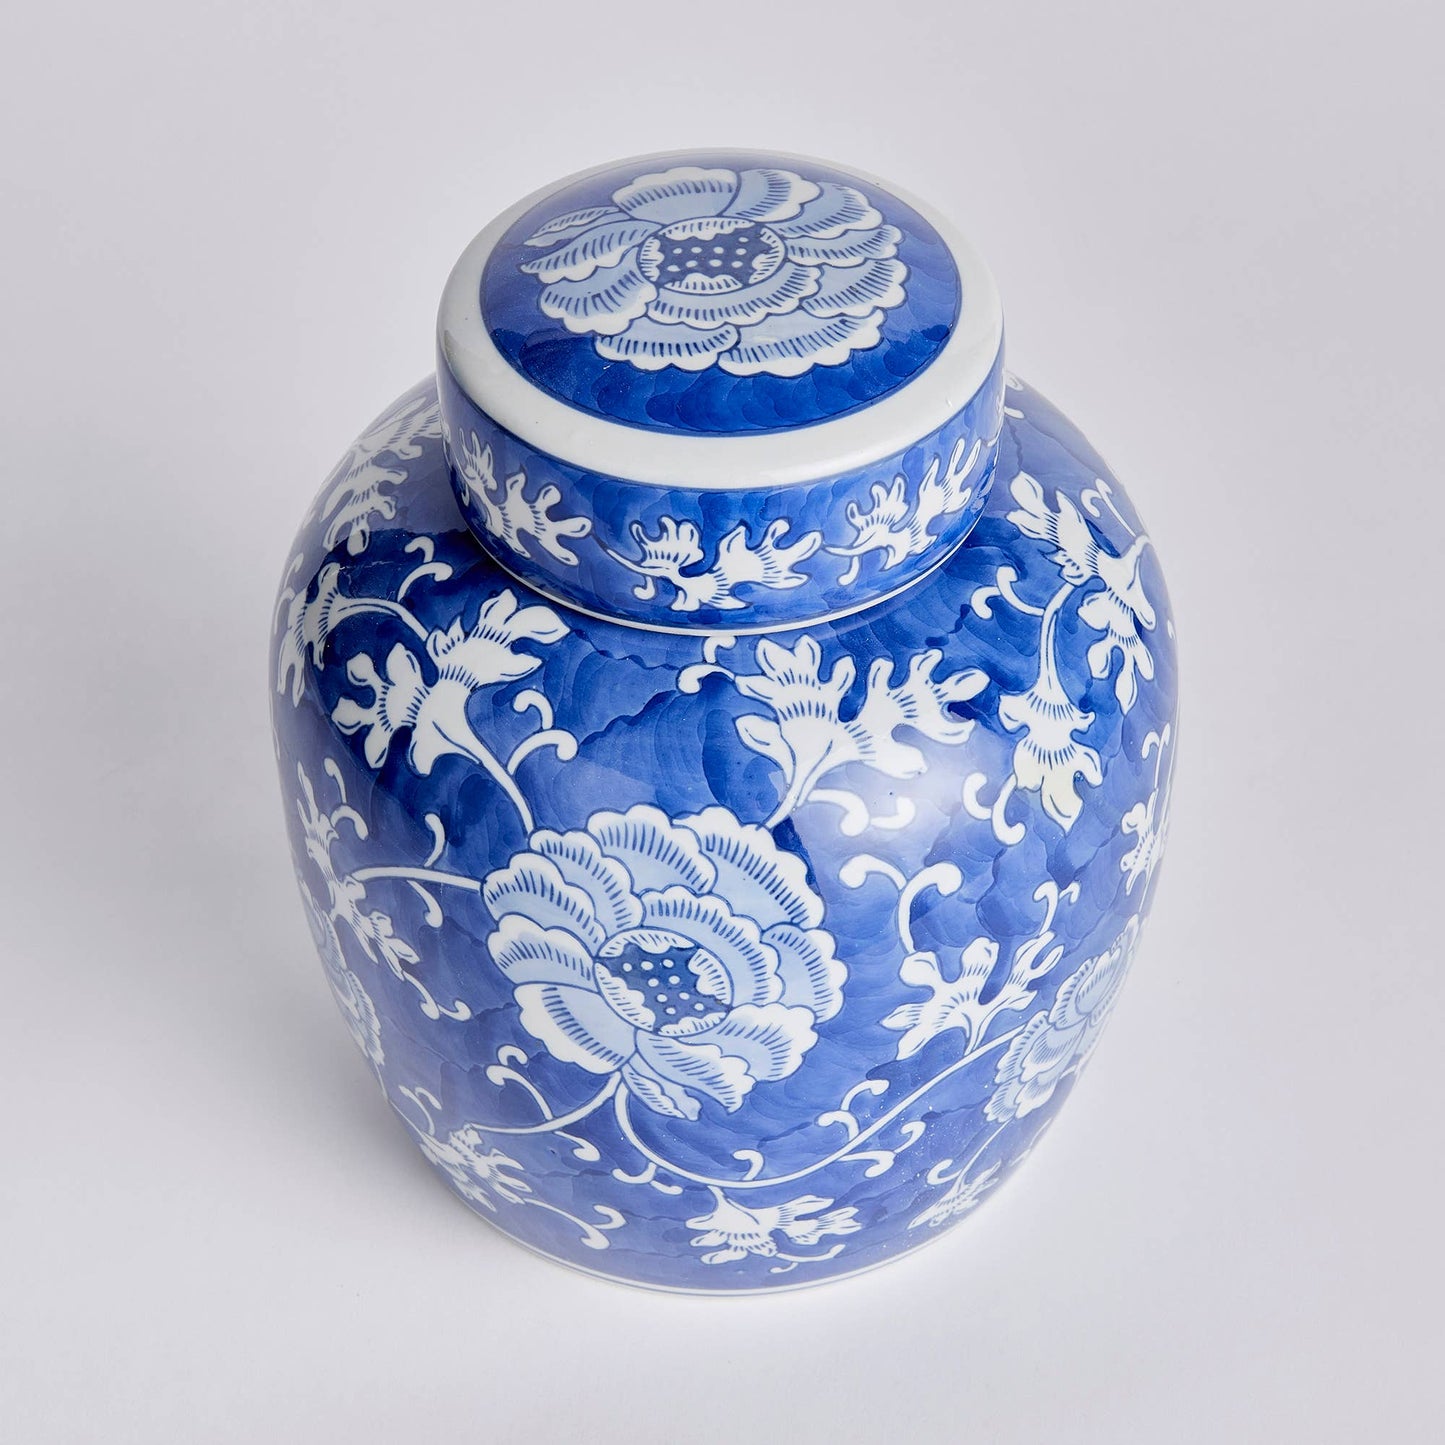 Barclay Butera Dynasty Lotus Lidded Jar: Classic Blue/White / Ceramic